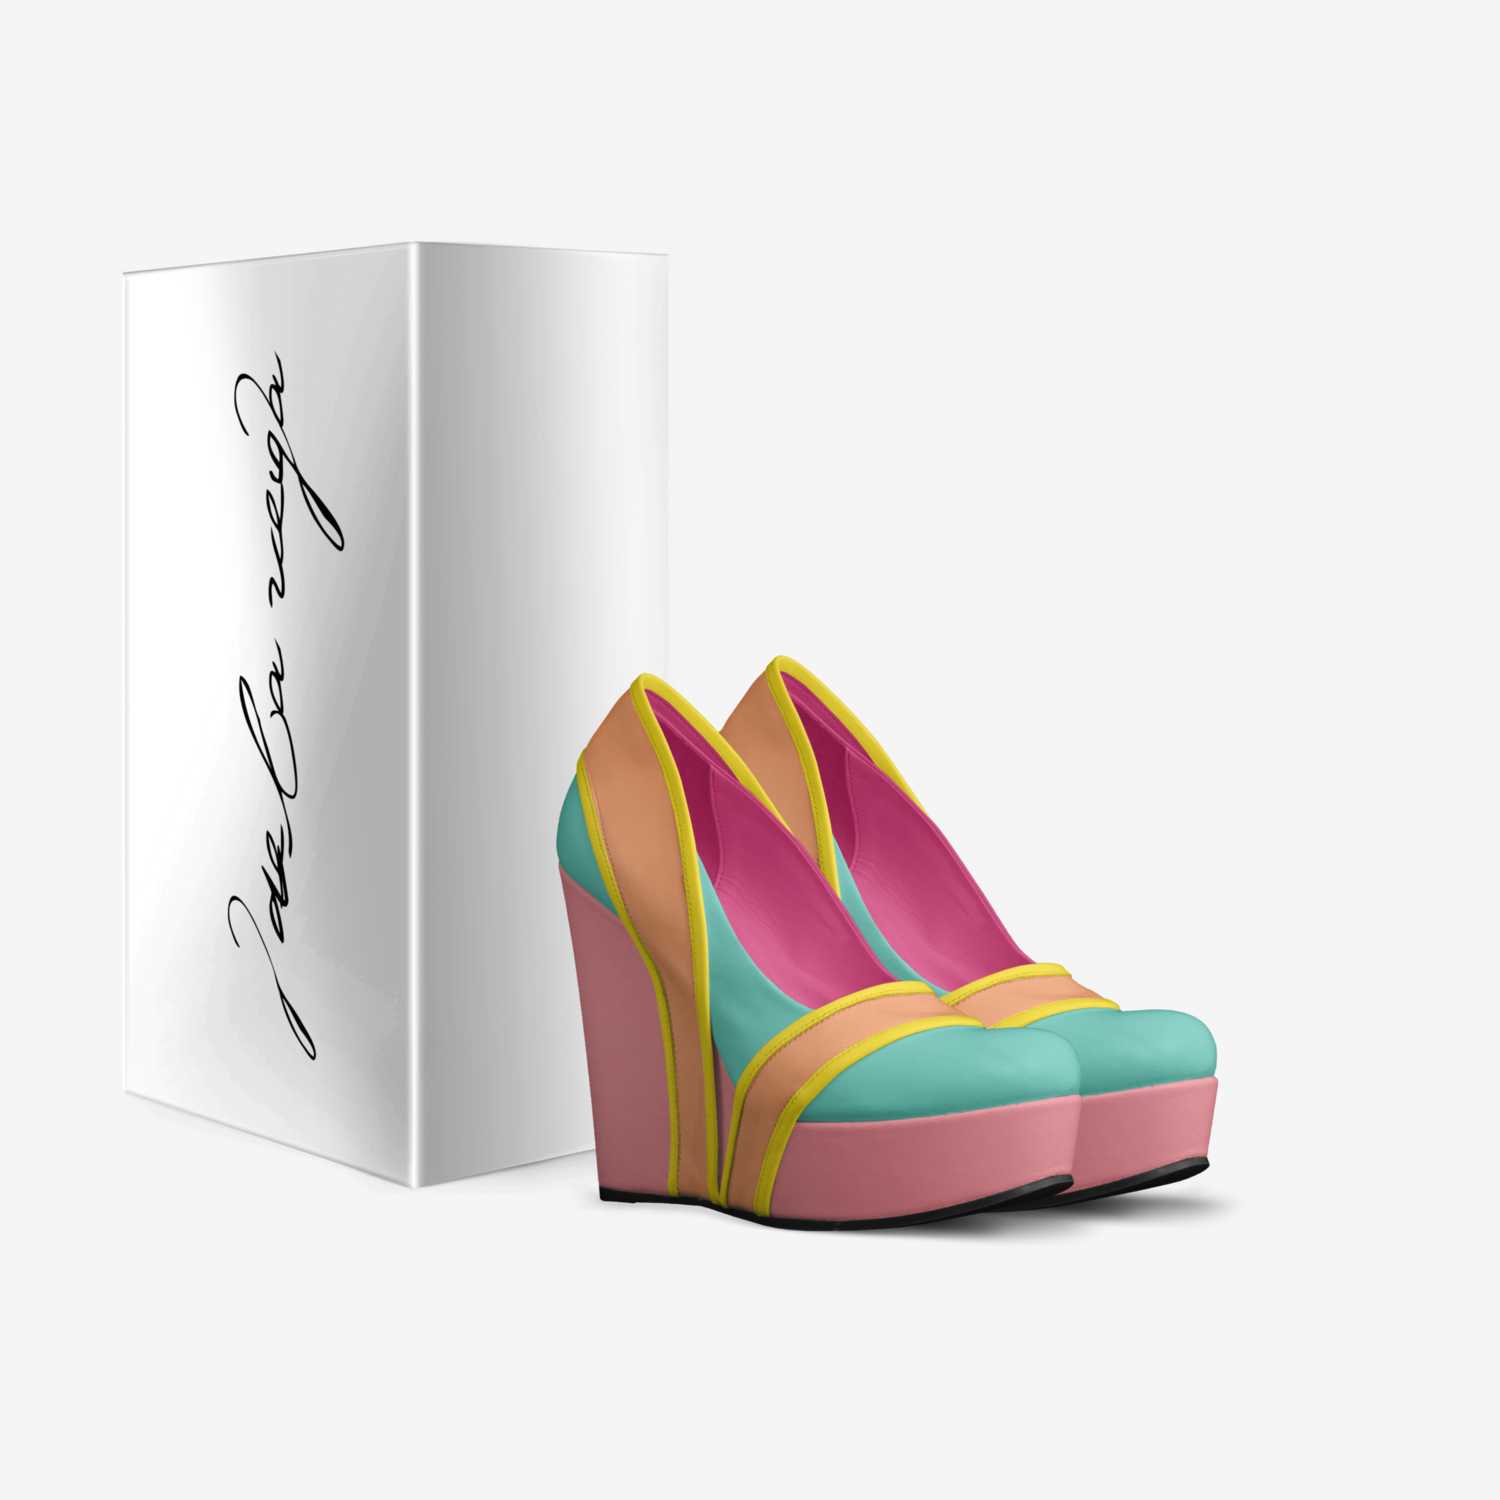 J de laVega custom made in Italy shoes by Danielle Montalvo | Box view